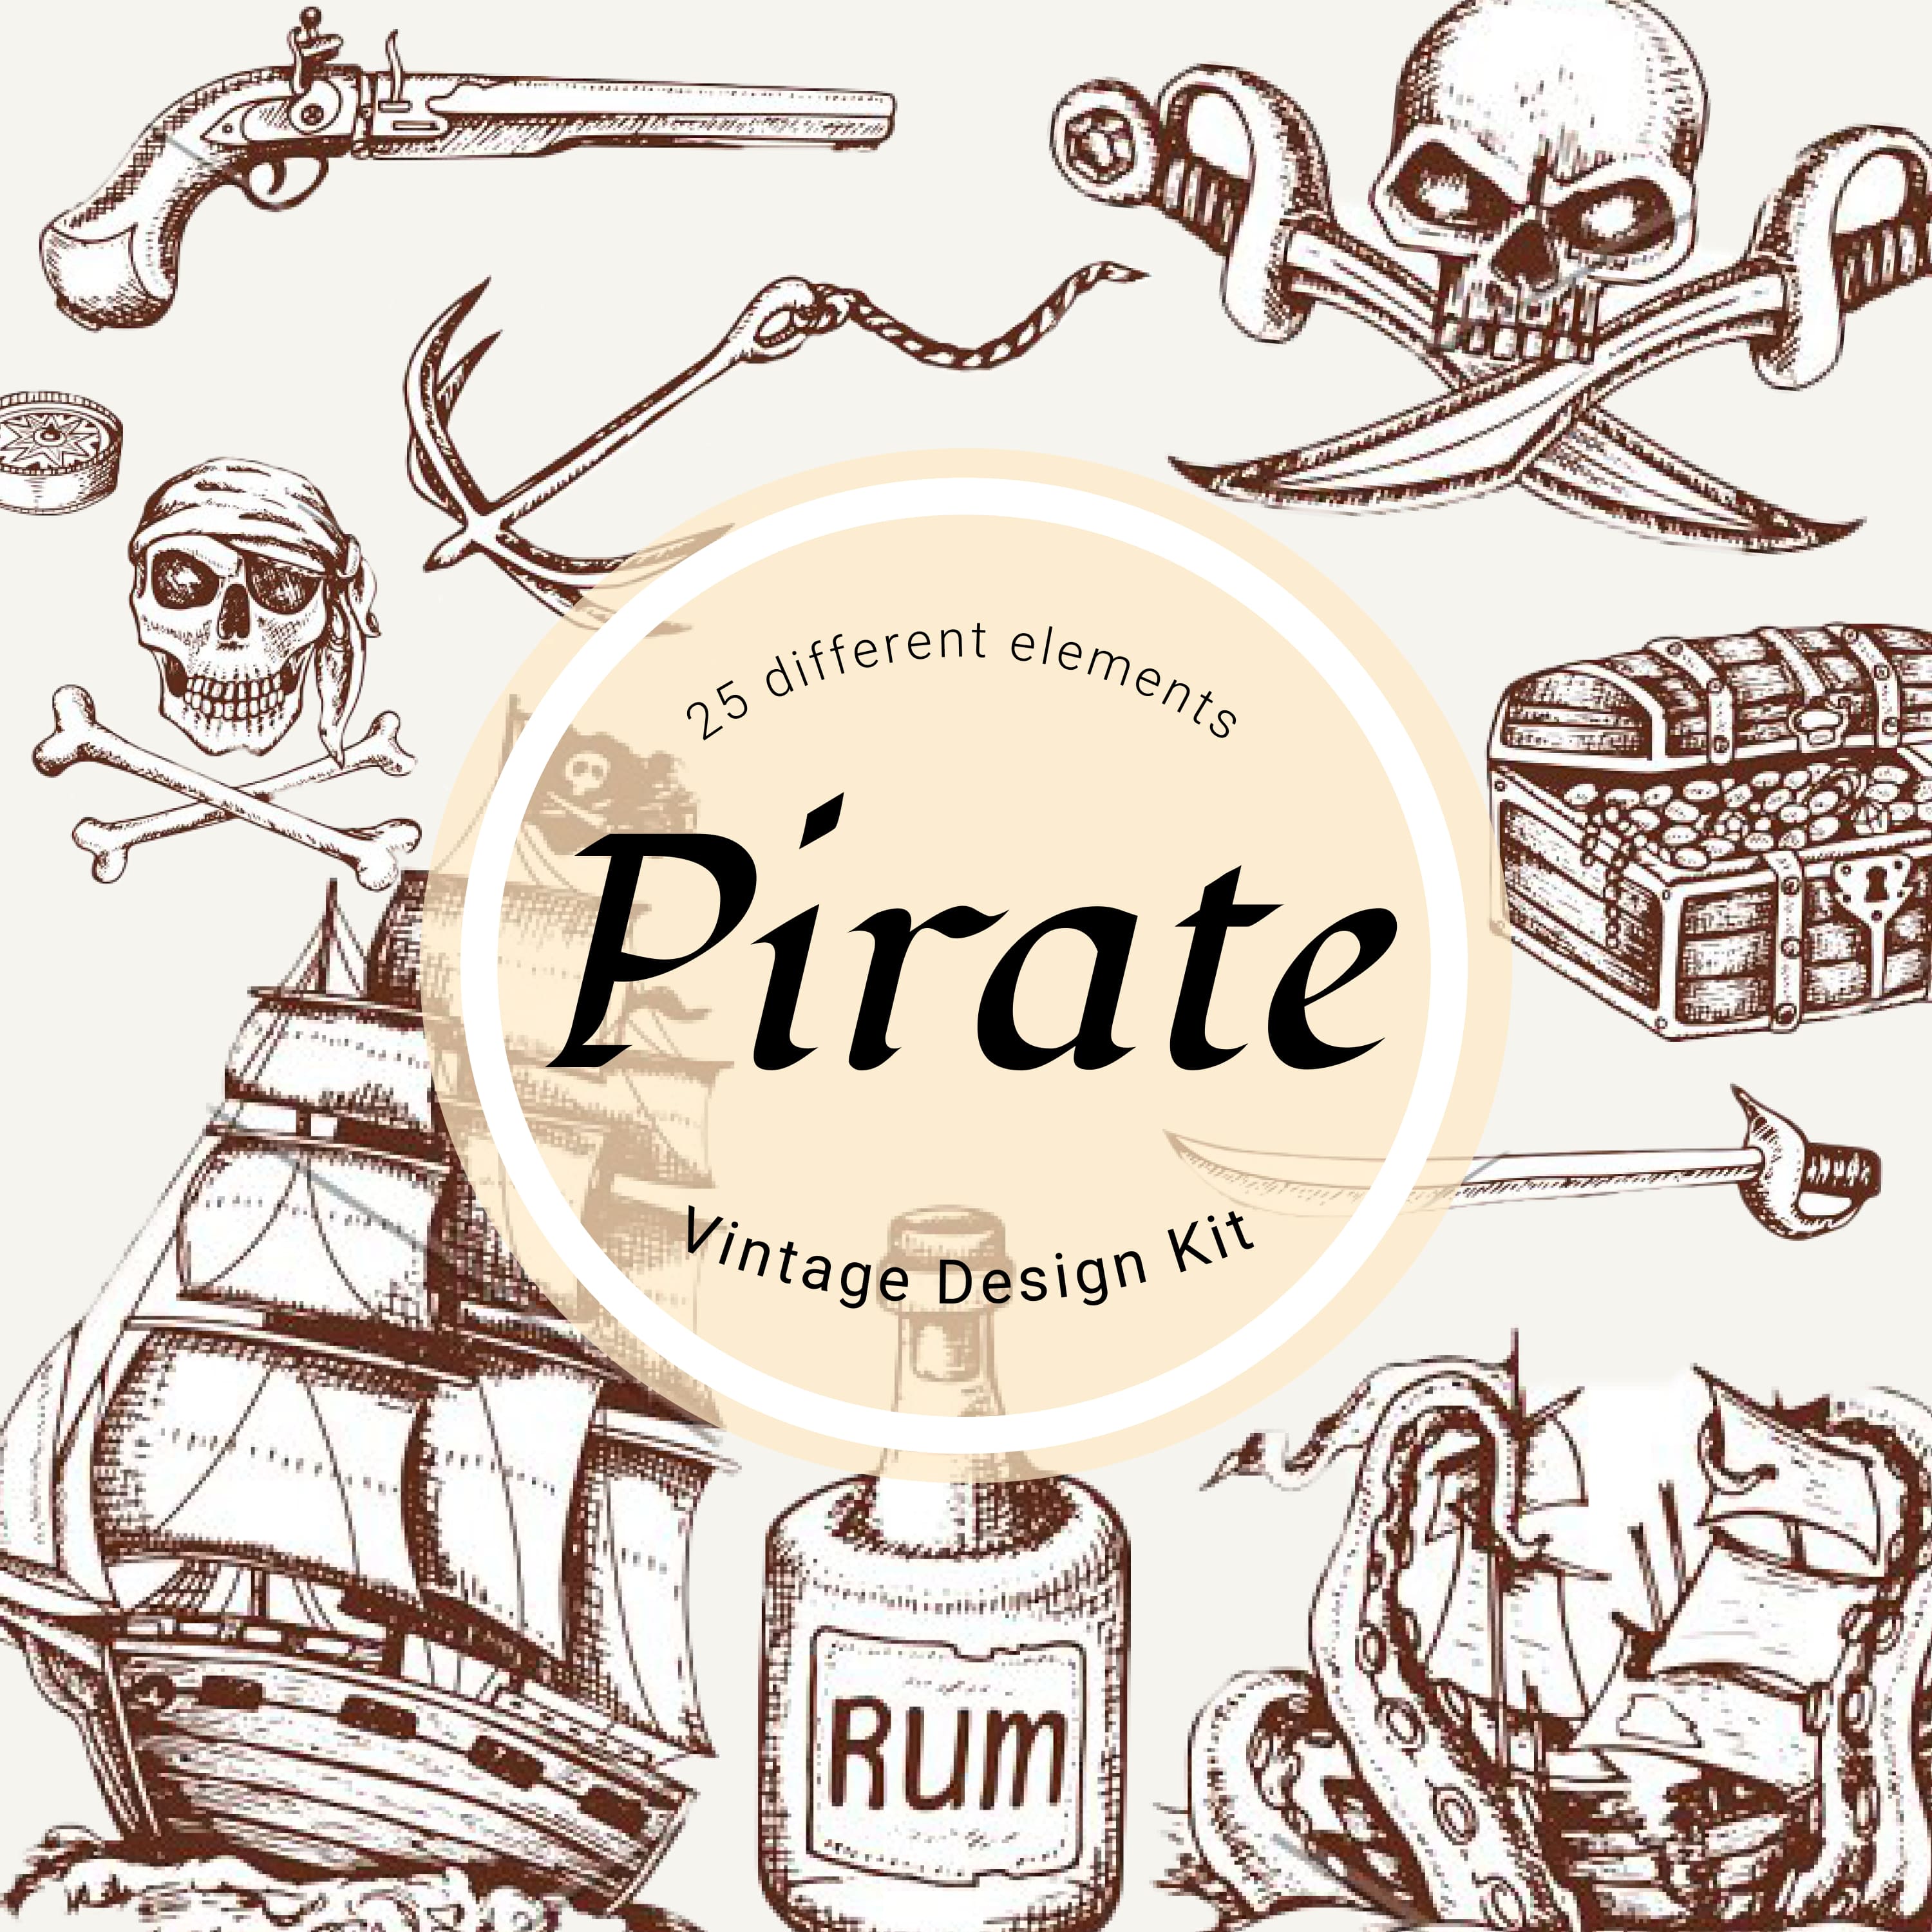 Vintage Pirate Design Kit.